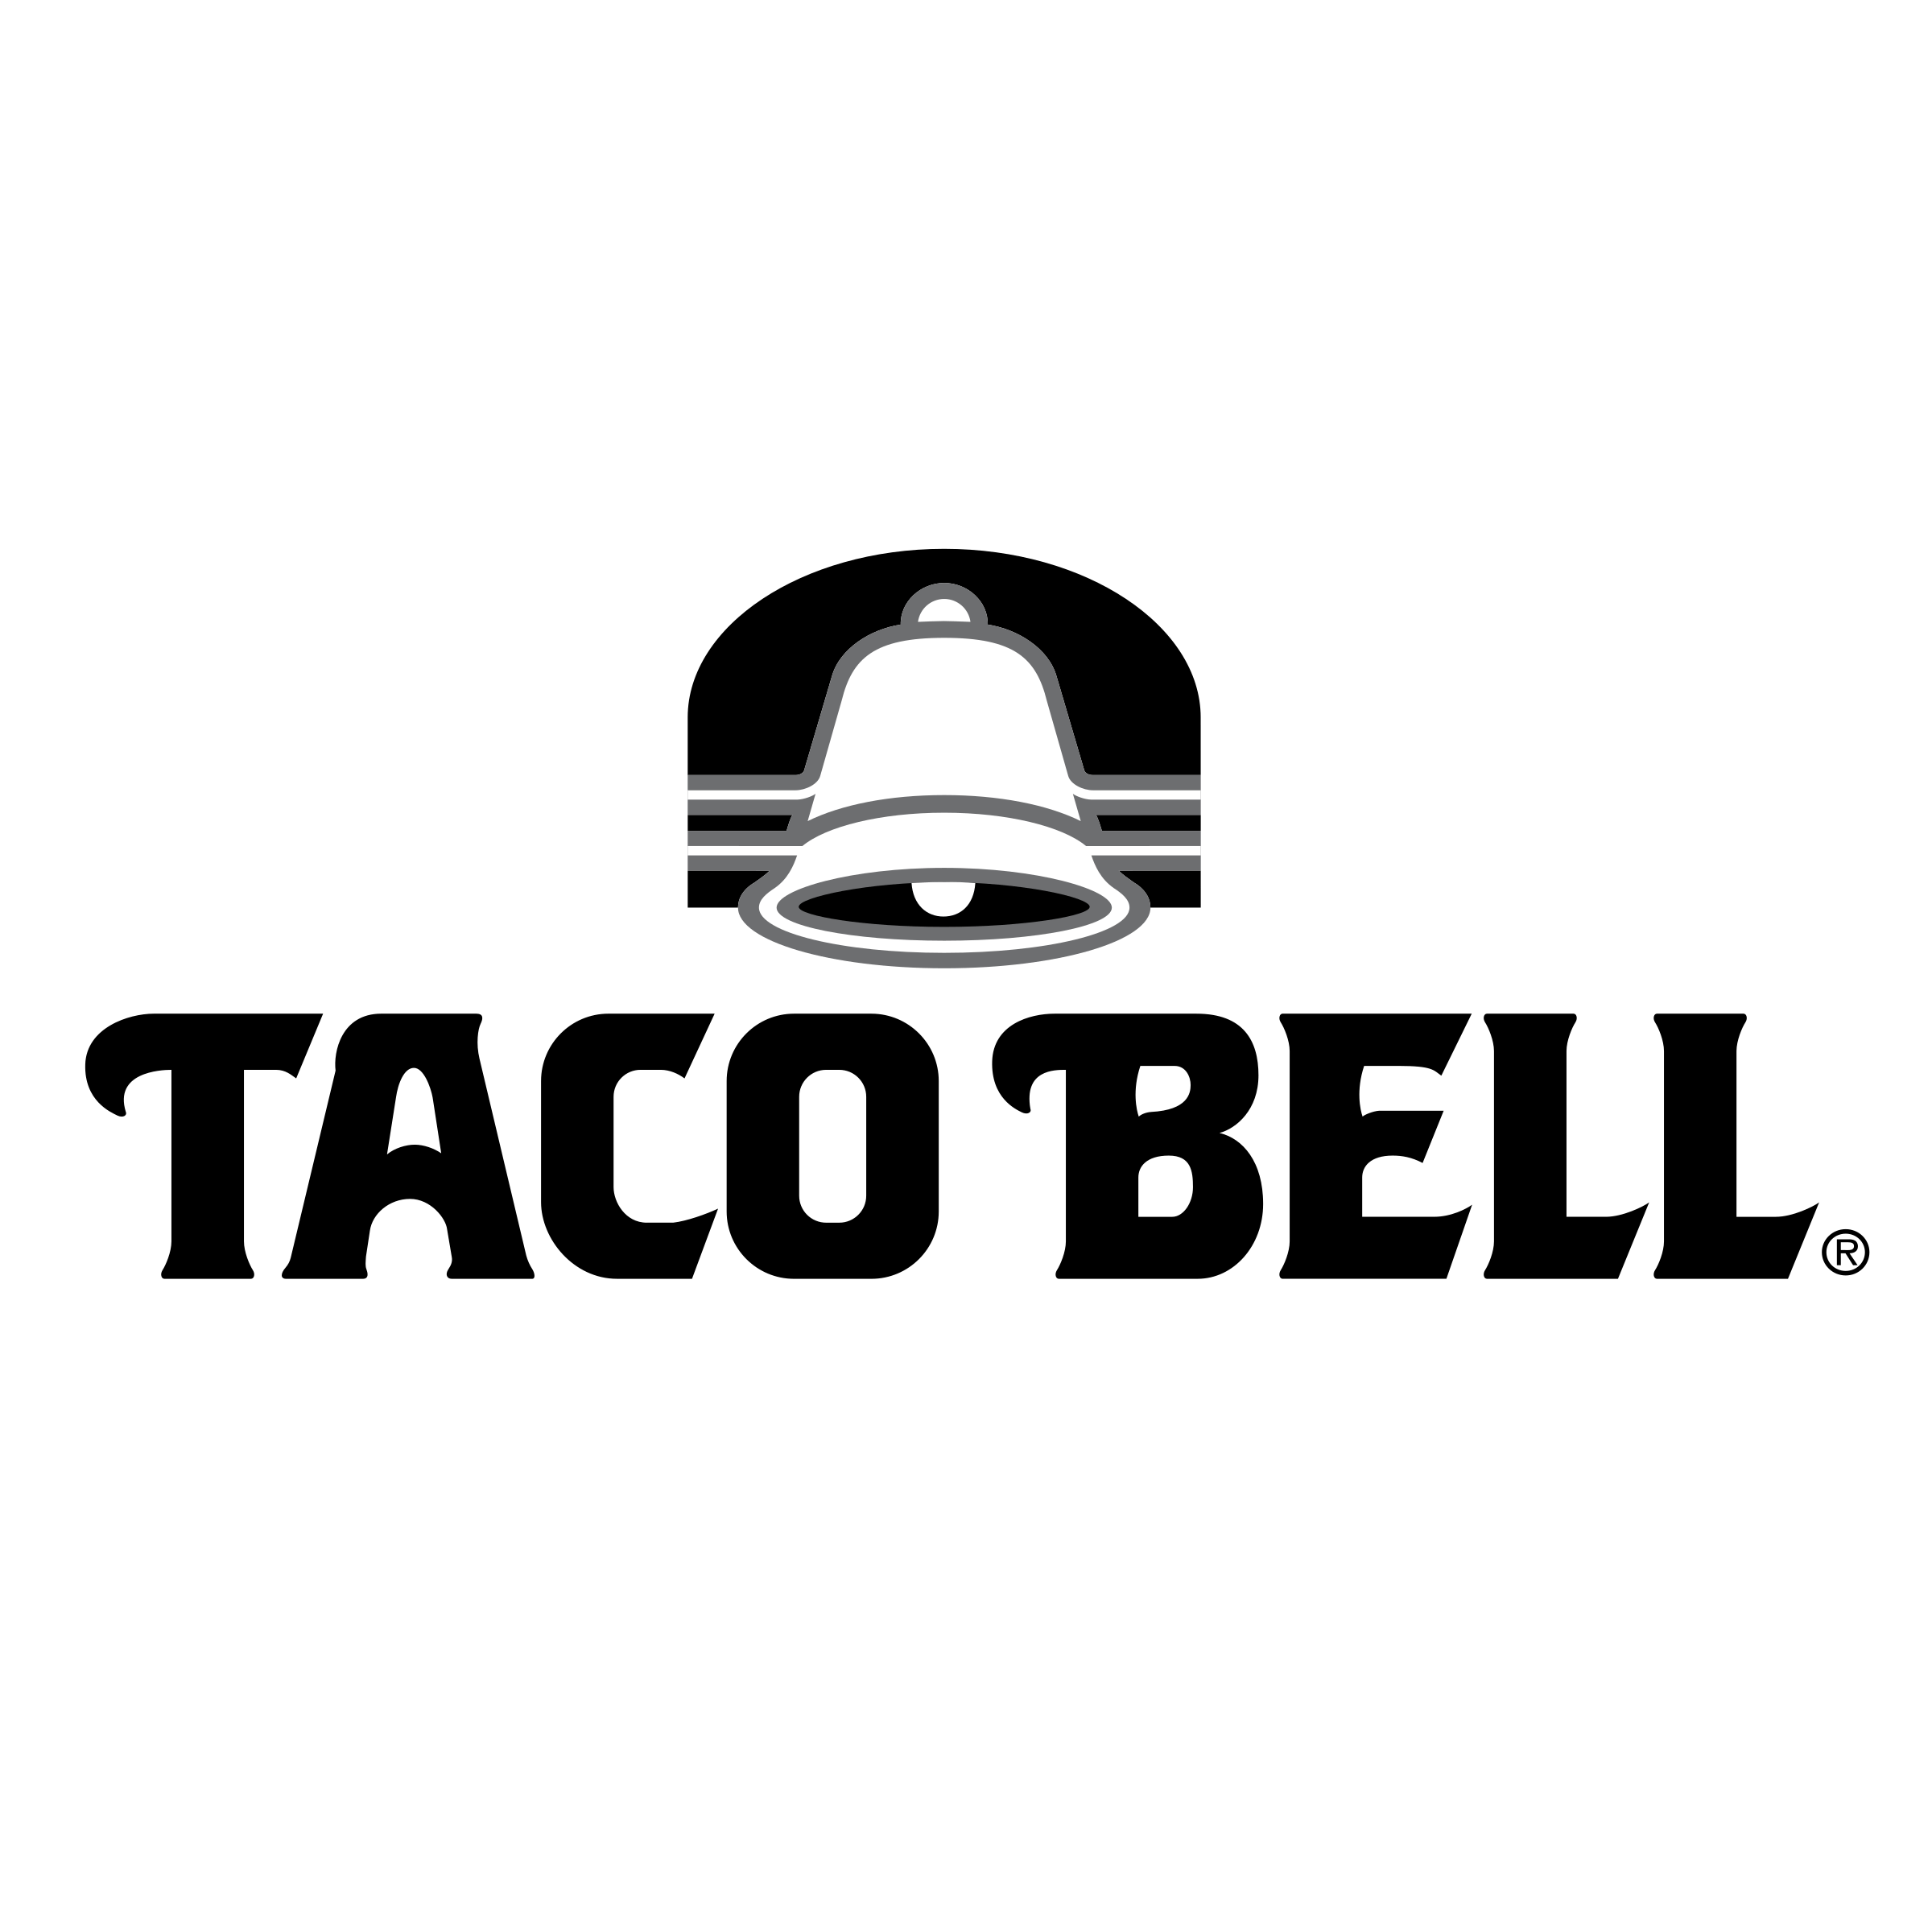 Black Bell Logo - Taco Bell Logo PNG Transparent & SVG Vector - Freebie Supply